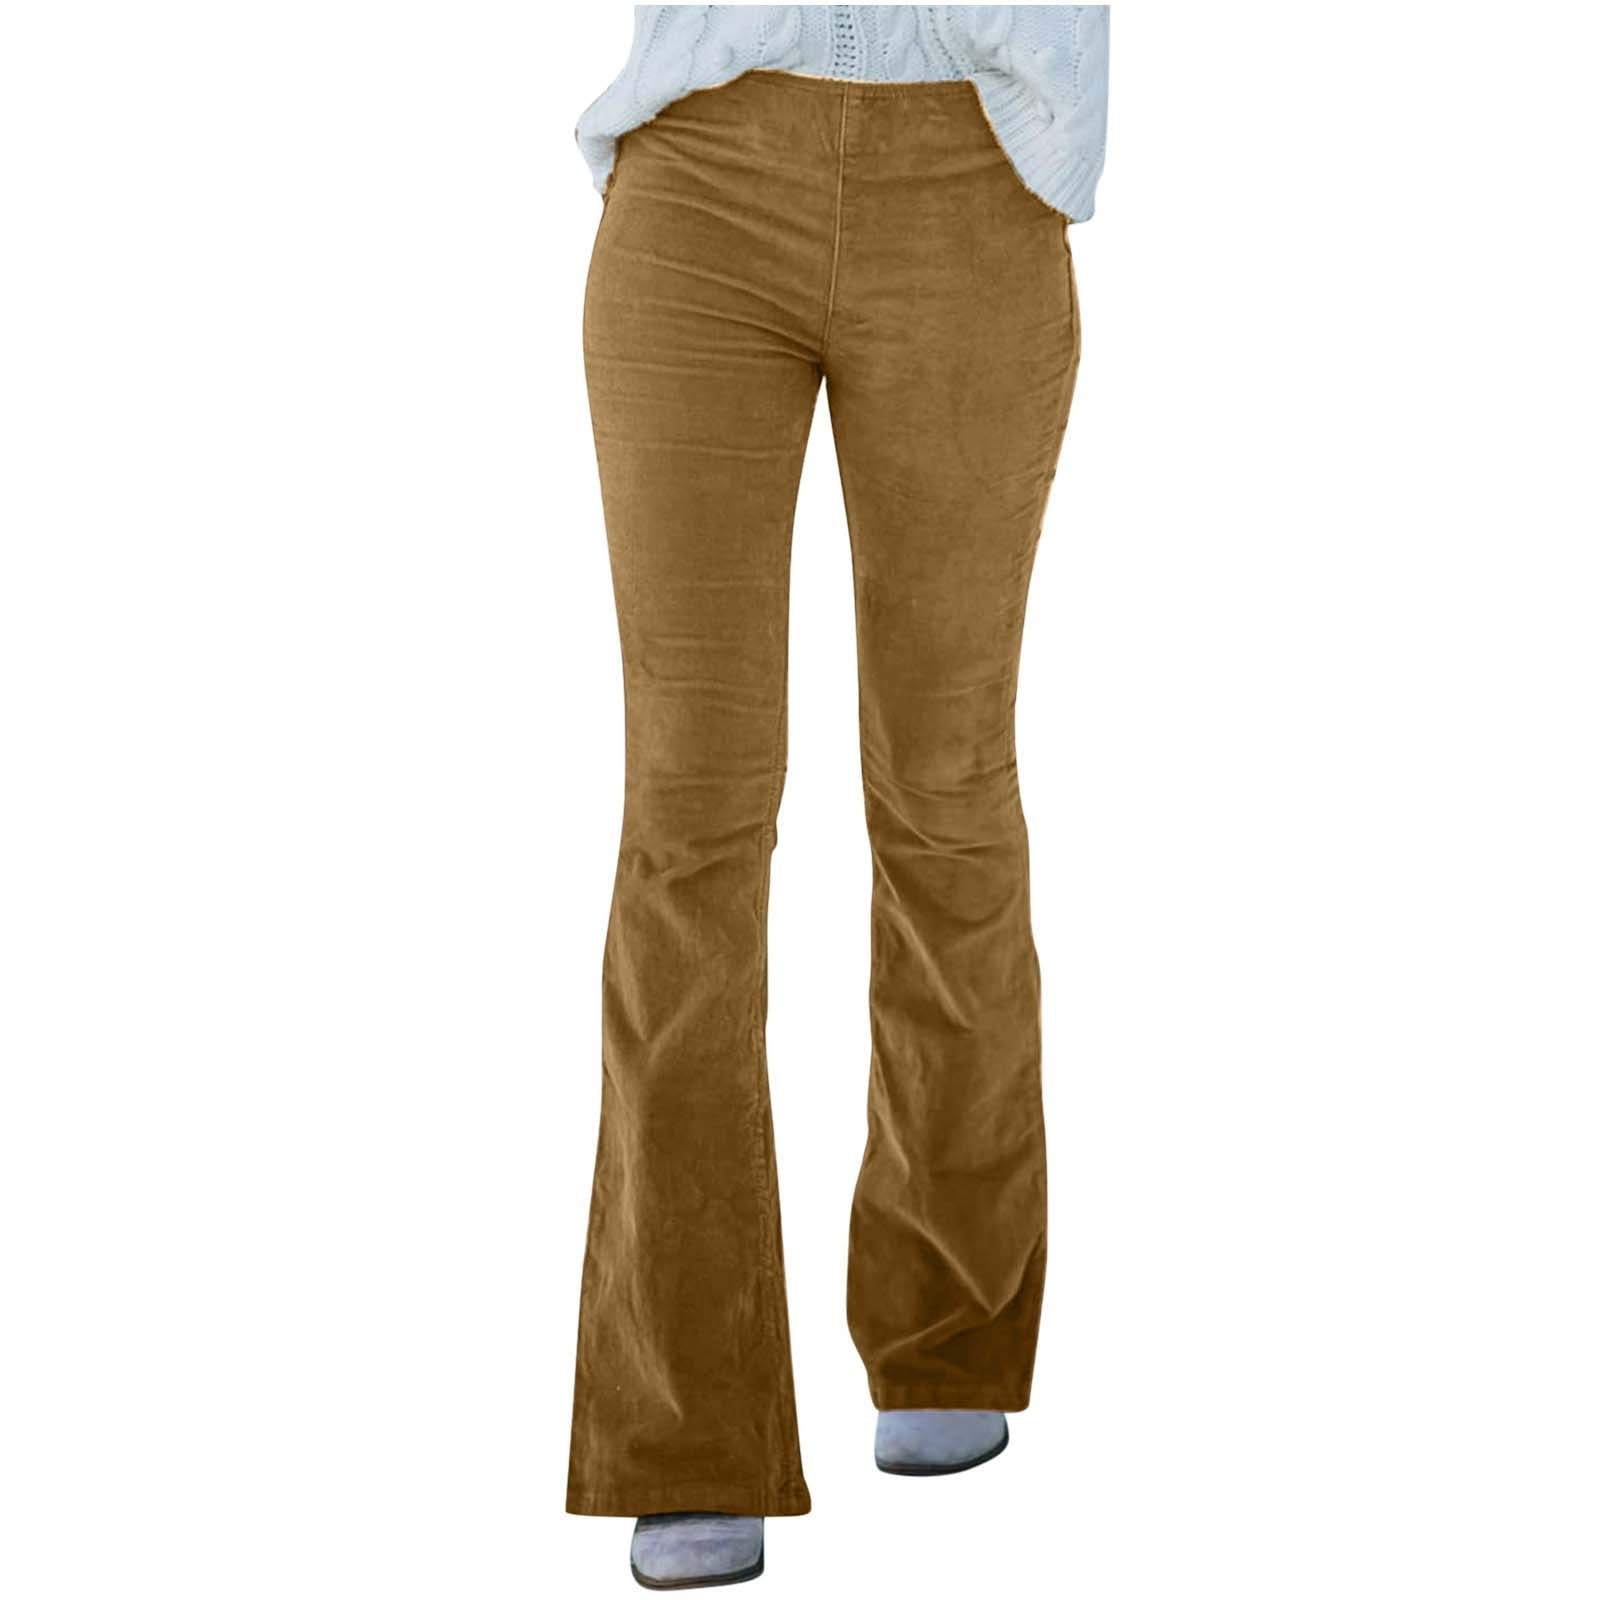 Women Corduroy Flare Pants Elastic Waist Wide Leg Vintage Trousers Pants  with Pockets